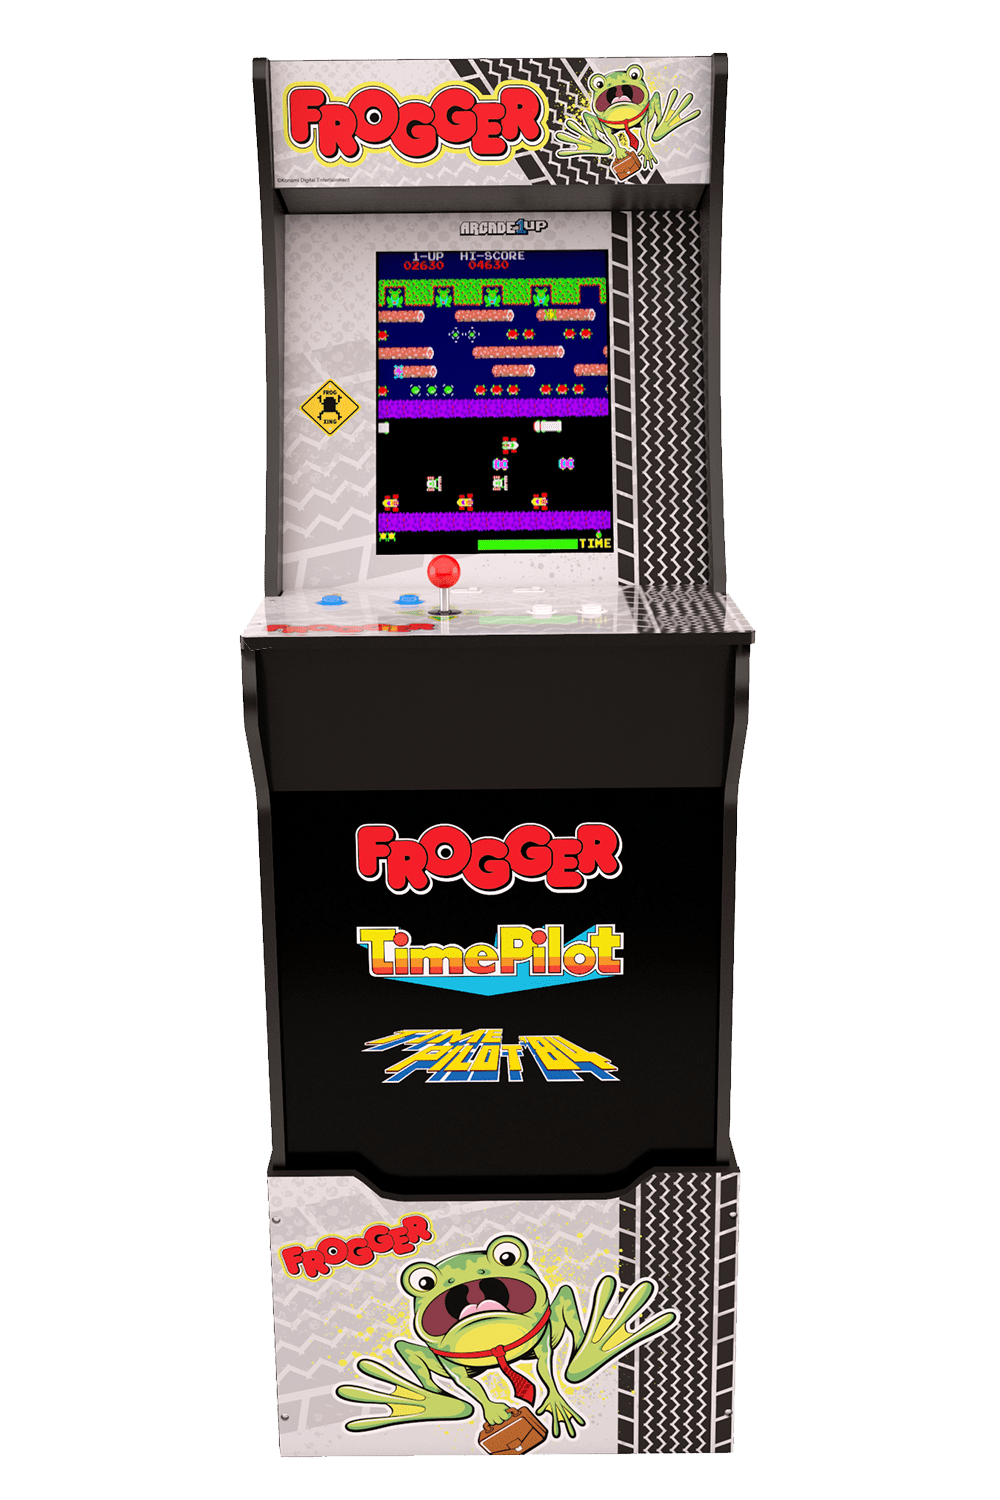 Frogger Side Art Arcade Cabinet Artwork Graphics Decals Full Set 